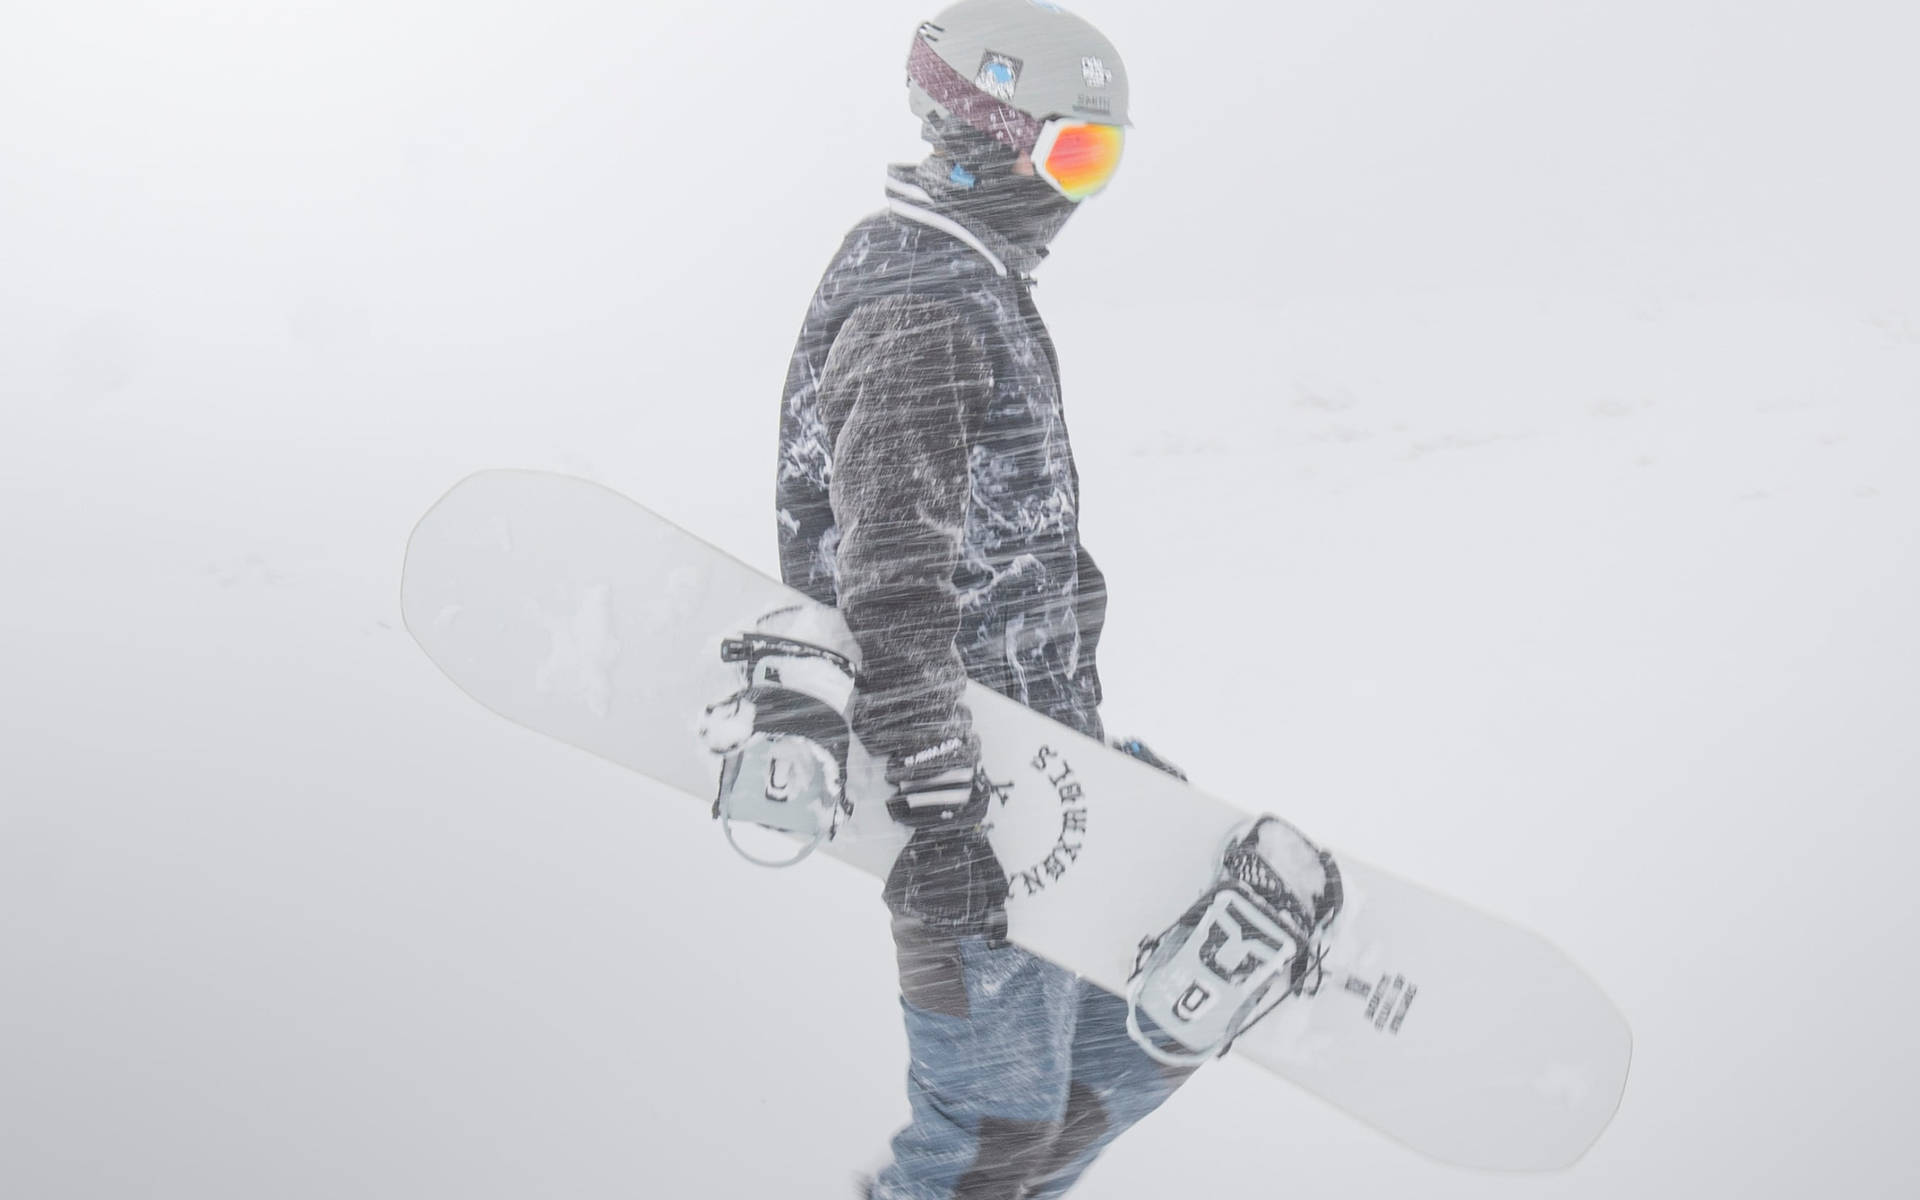 Personamisteriosa Practicando Snowboard Fondo de pantalla